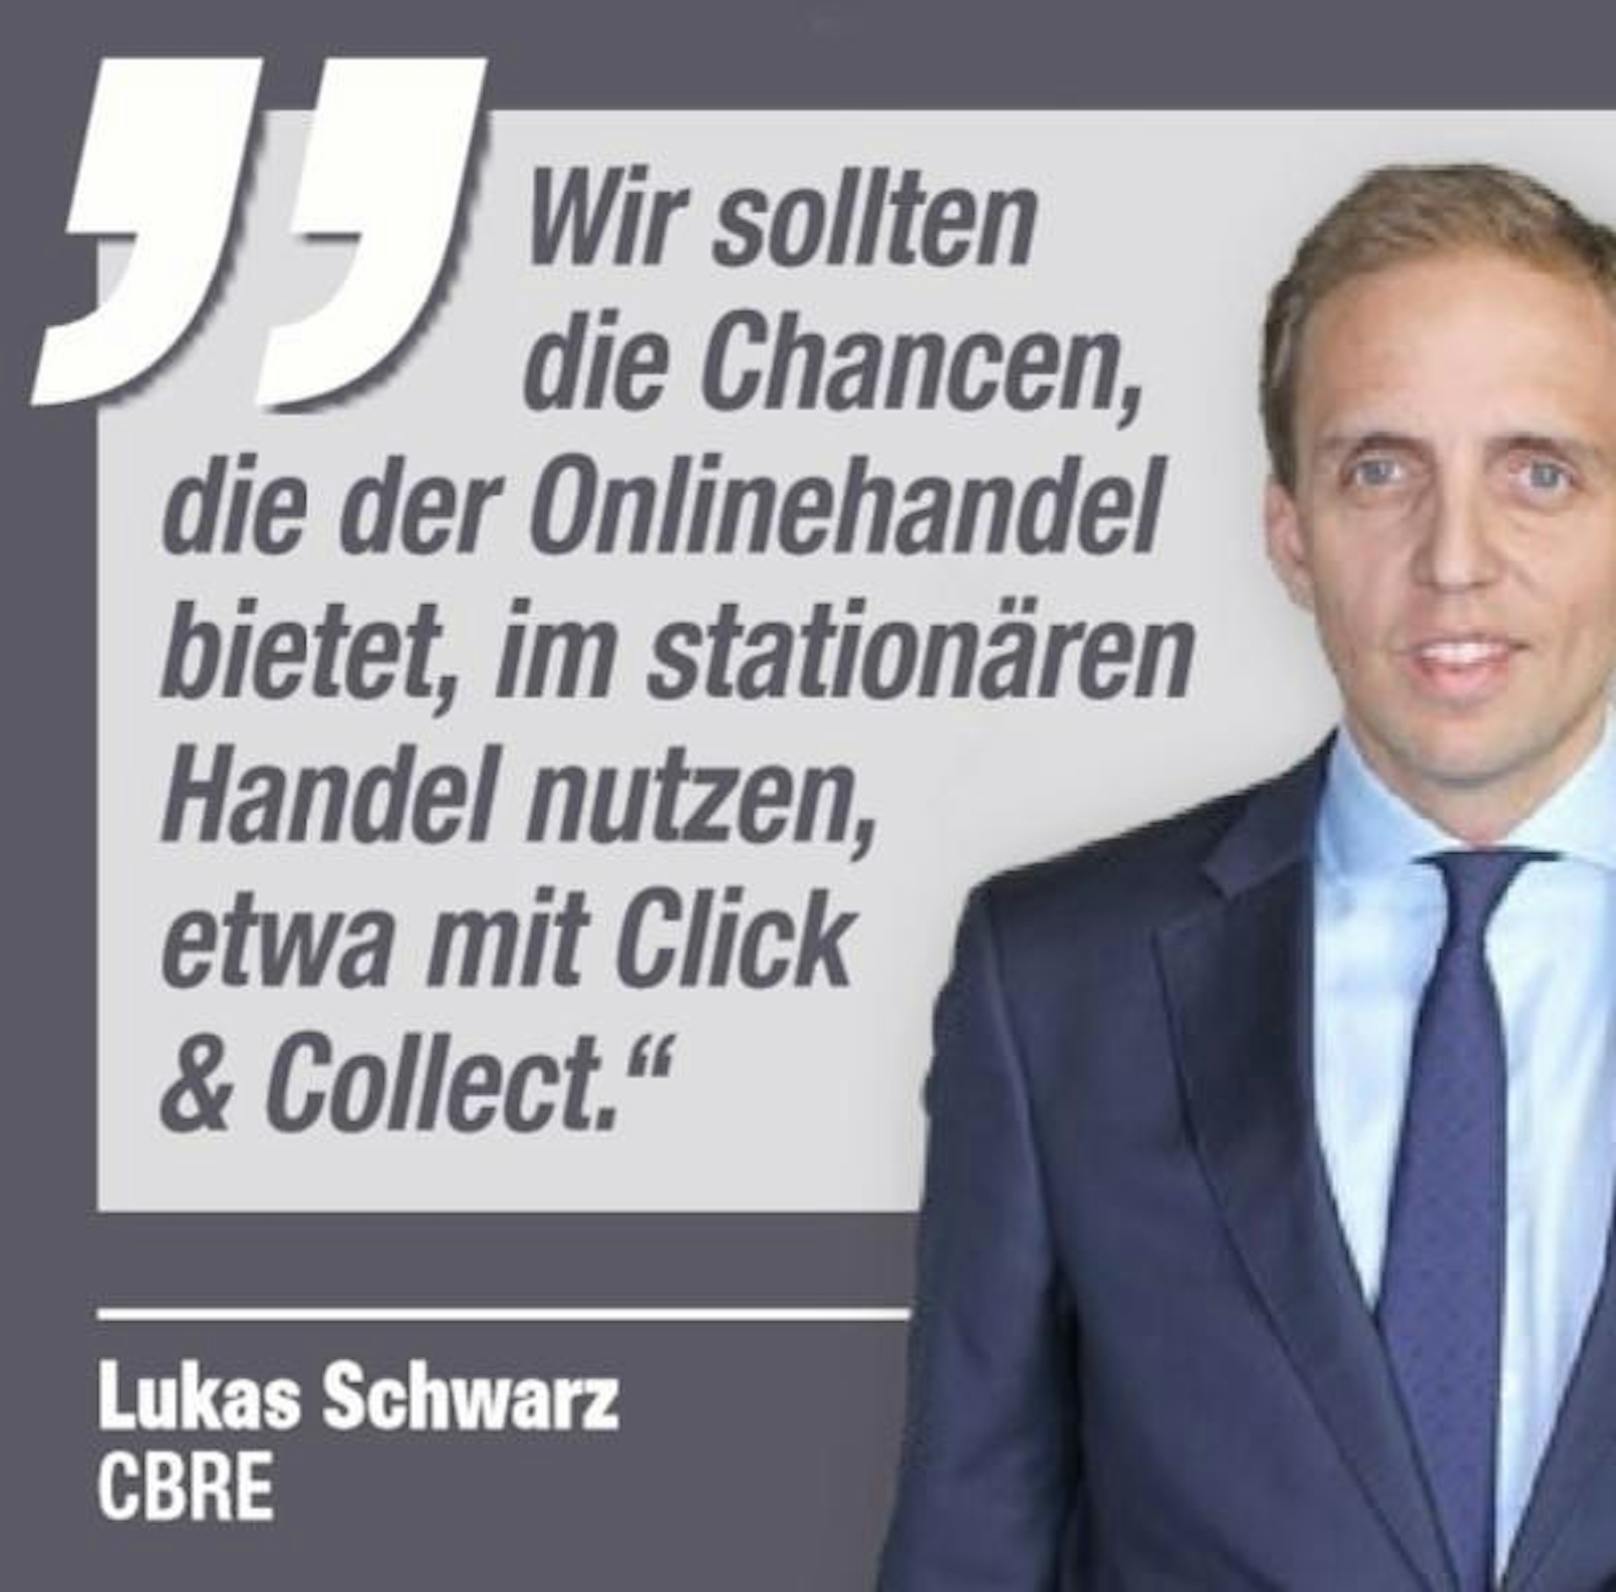 Lukas Schwarz, CBRE